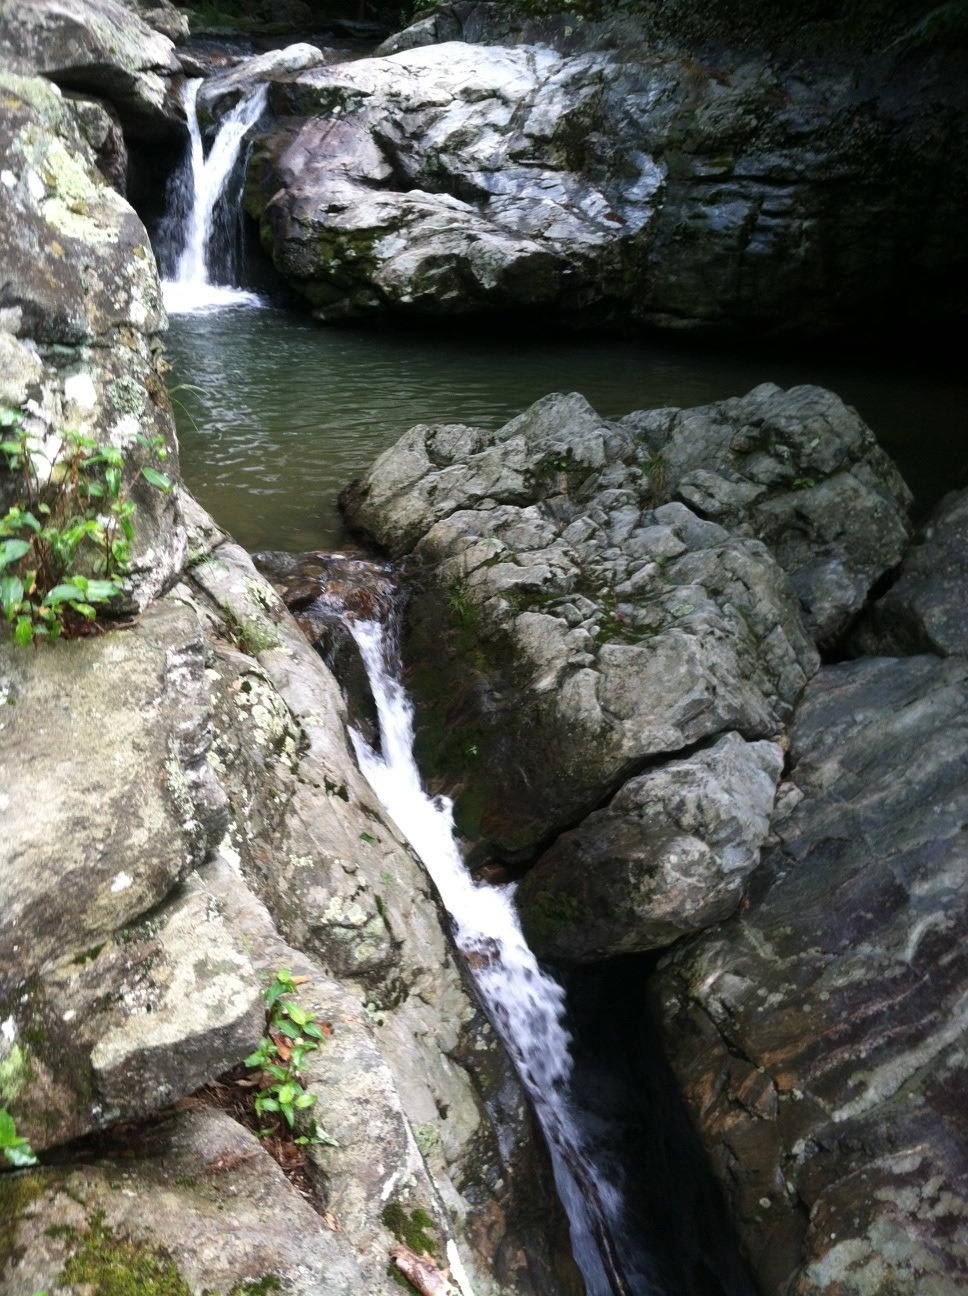 Laurel Creek Falls! For those of you who were wondering&hellip; &lt;3